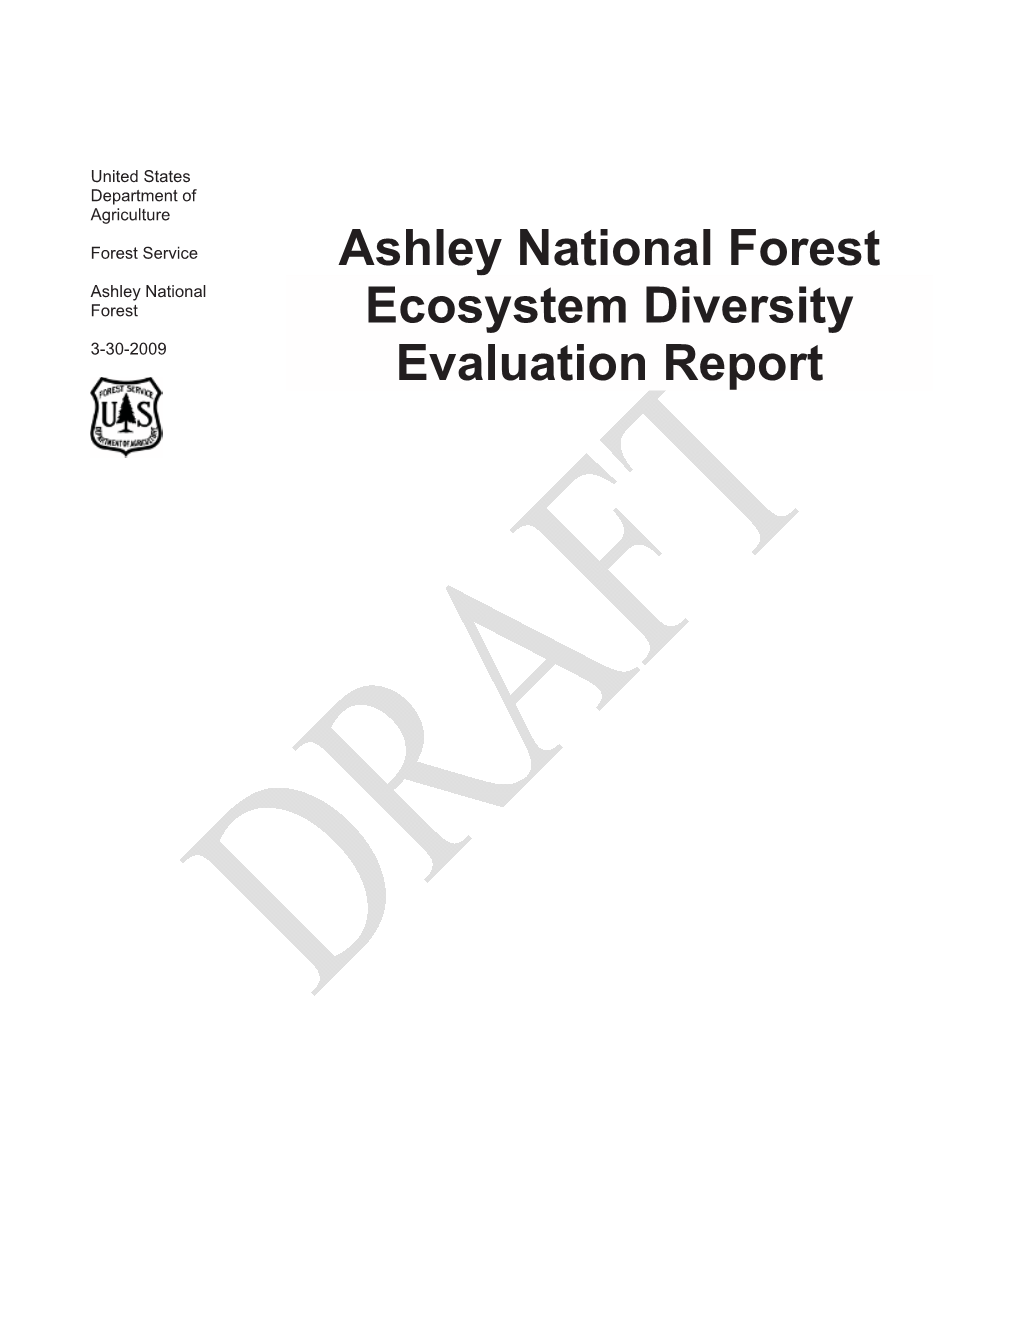 Ashley National Forest Ecosystem Diversity Evaluation Report